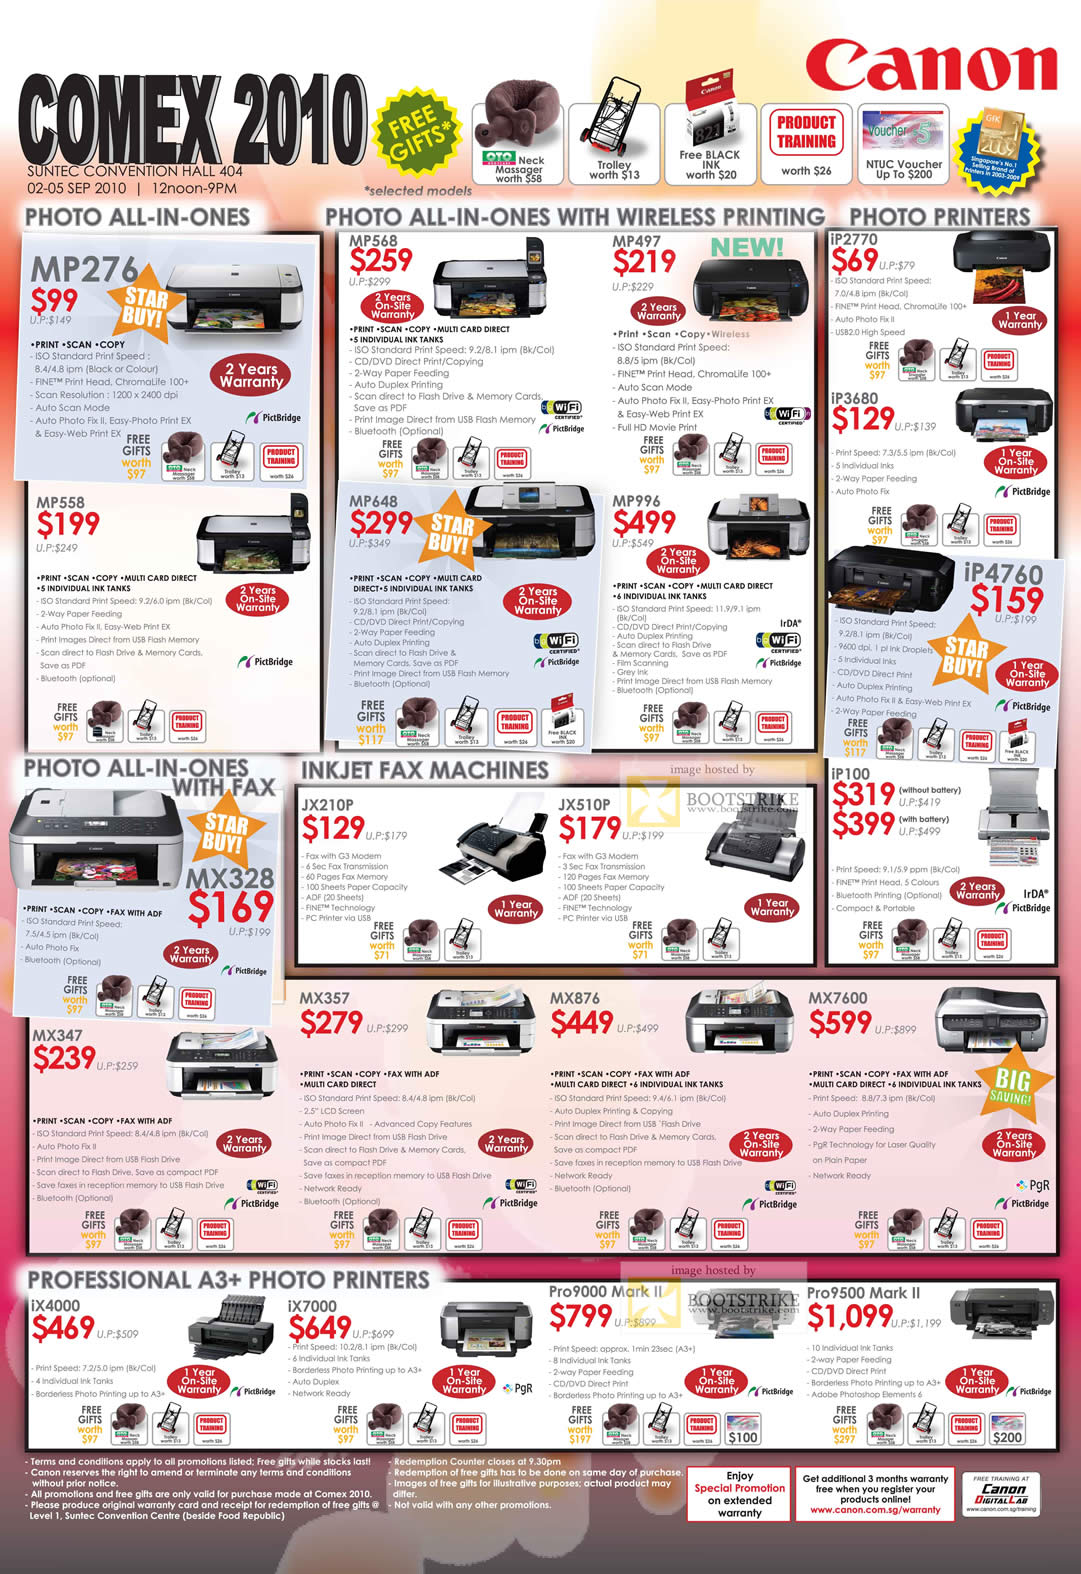 Comex 2010 price list image brochure of Canon Printers Photo All In One MP276 Wireless MP996 IP2770 Inkjet JX210P MX357 MX7600 A3 Pro9500 IX4000